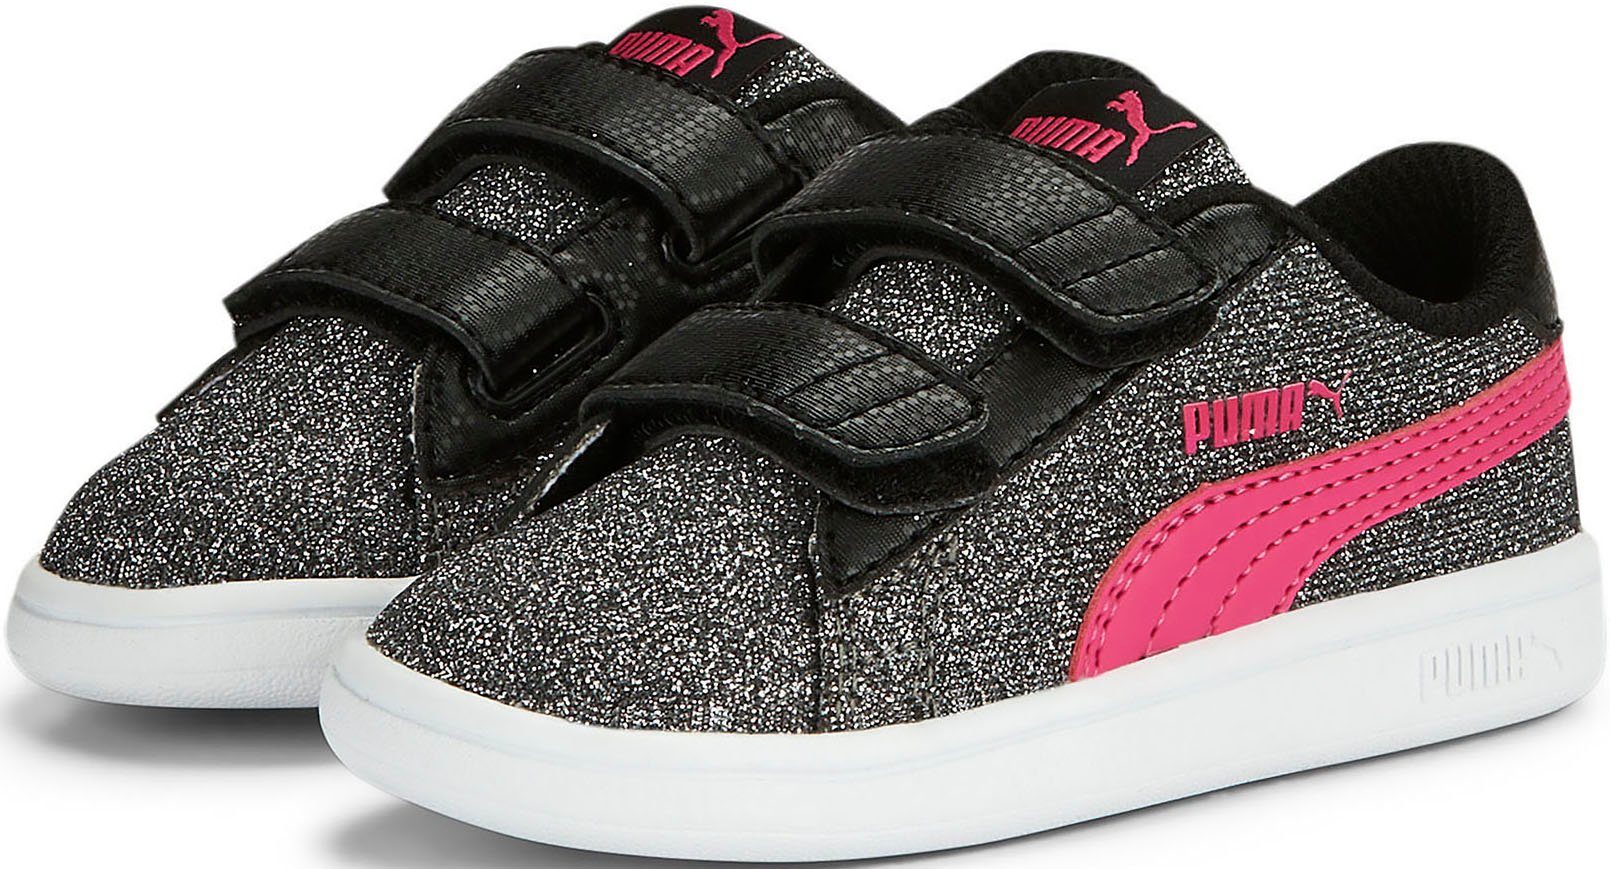 PUMA Puma Smash v2 V Inf Klettverschluss Sneaker mit schwarz-pink Glitz